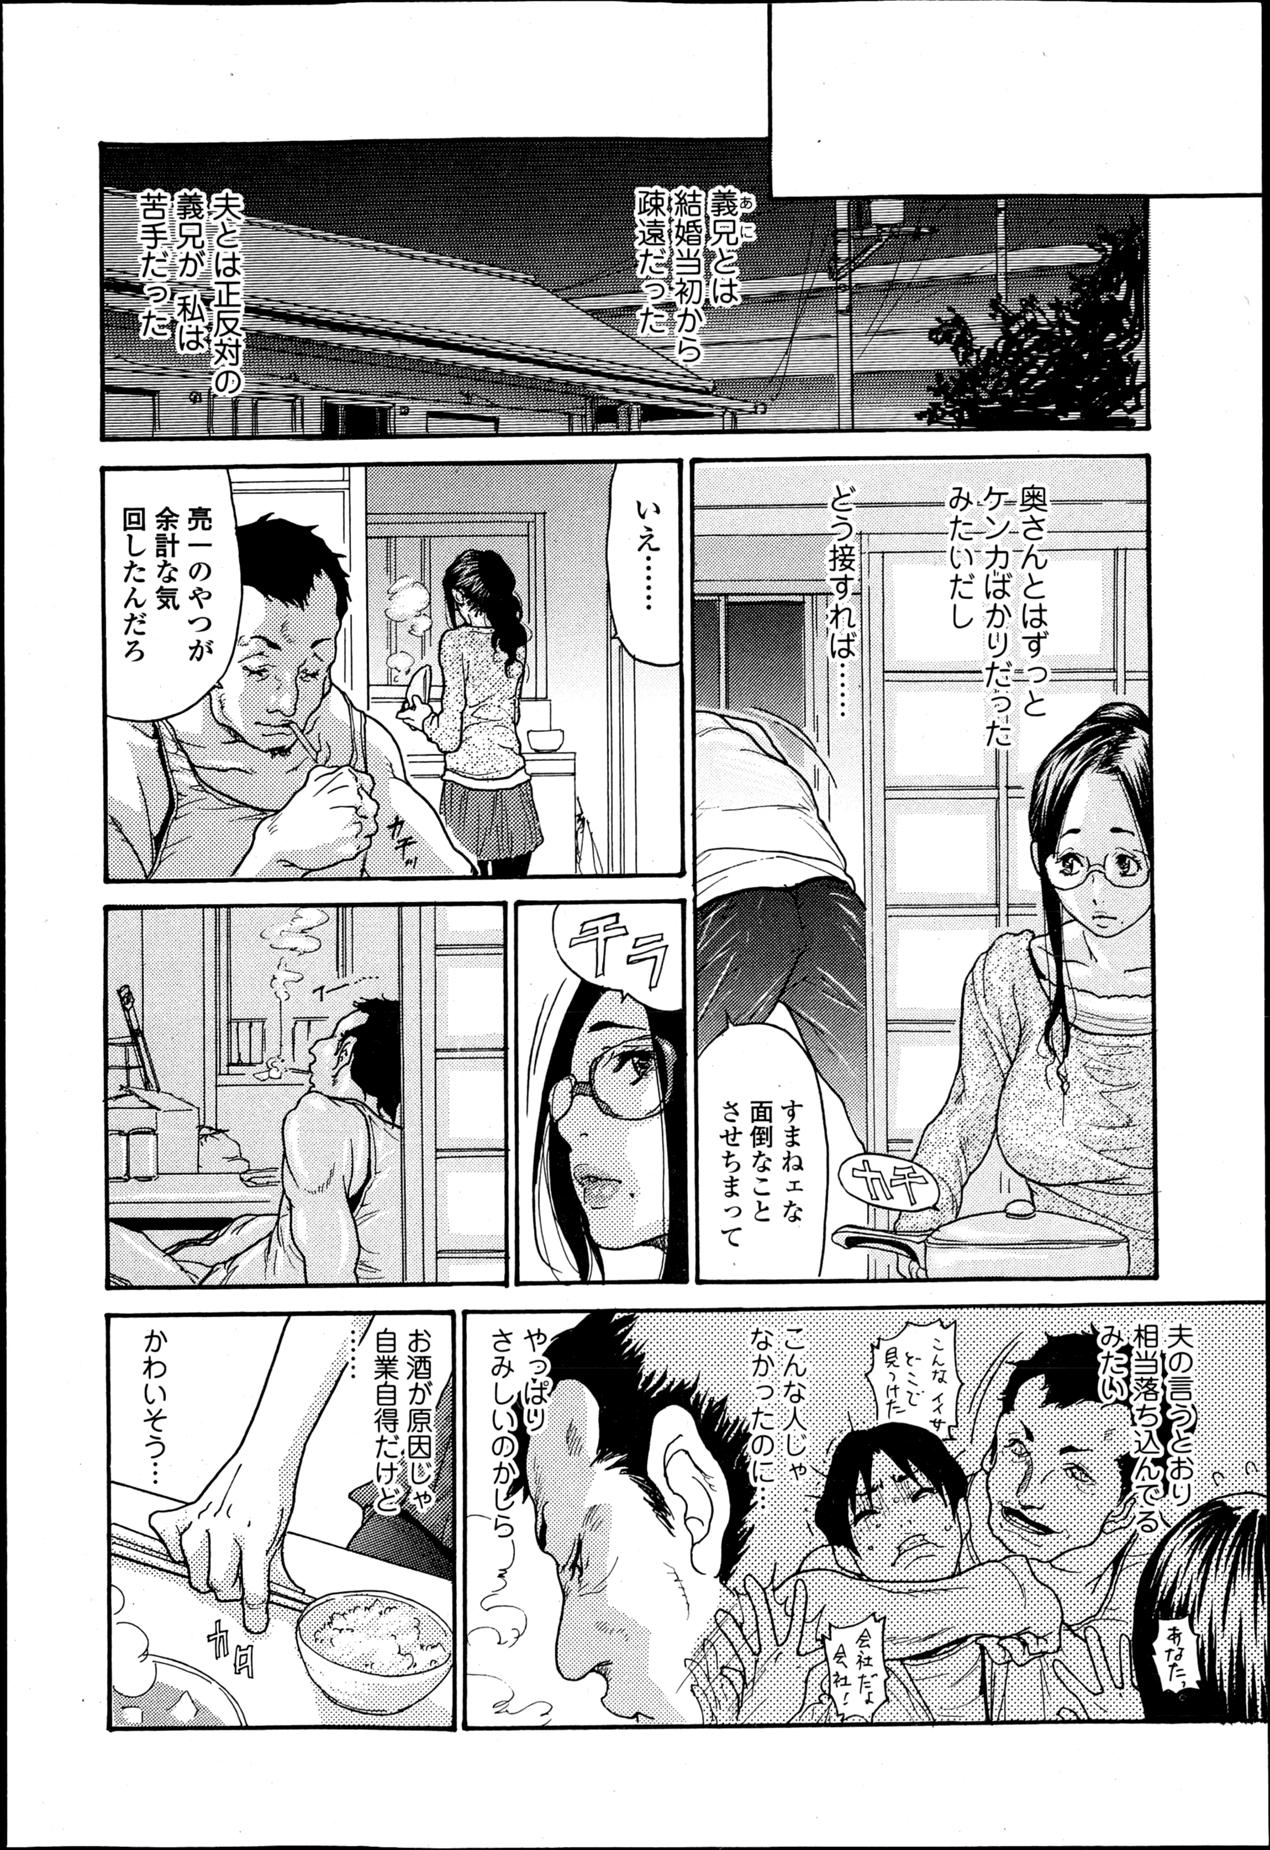 Bishoujo Kakumei KIWAME Road Vol.6 24